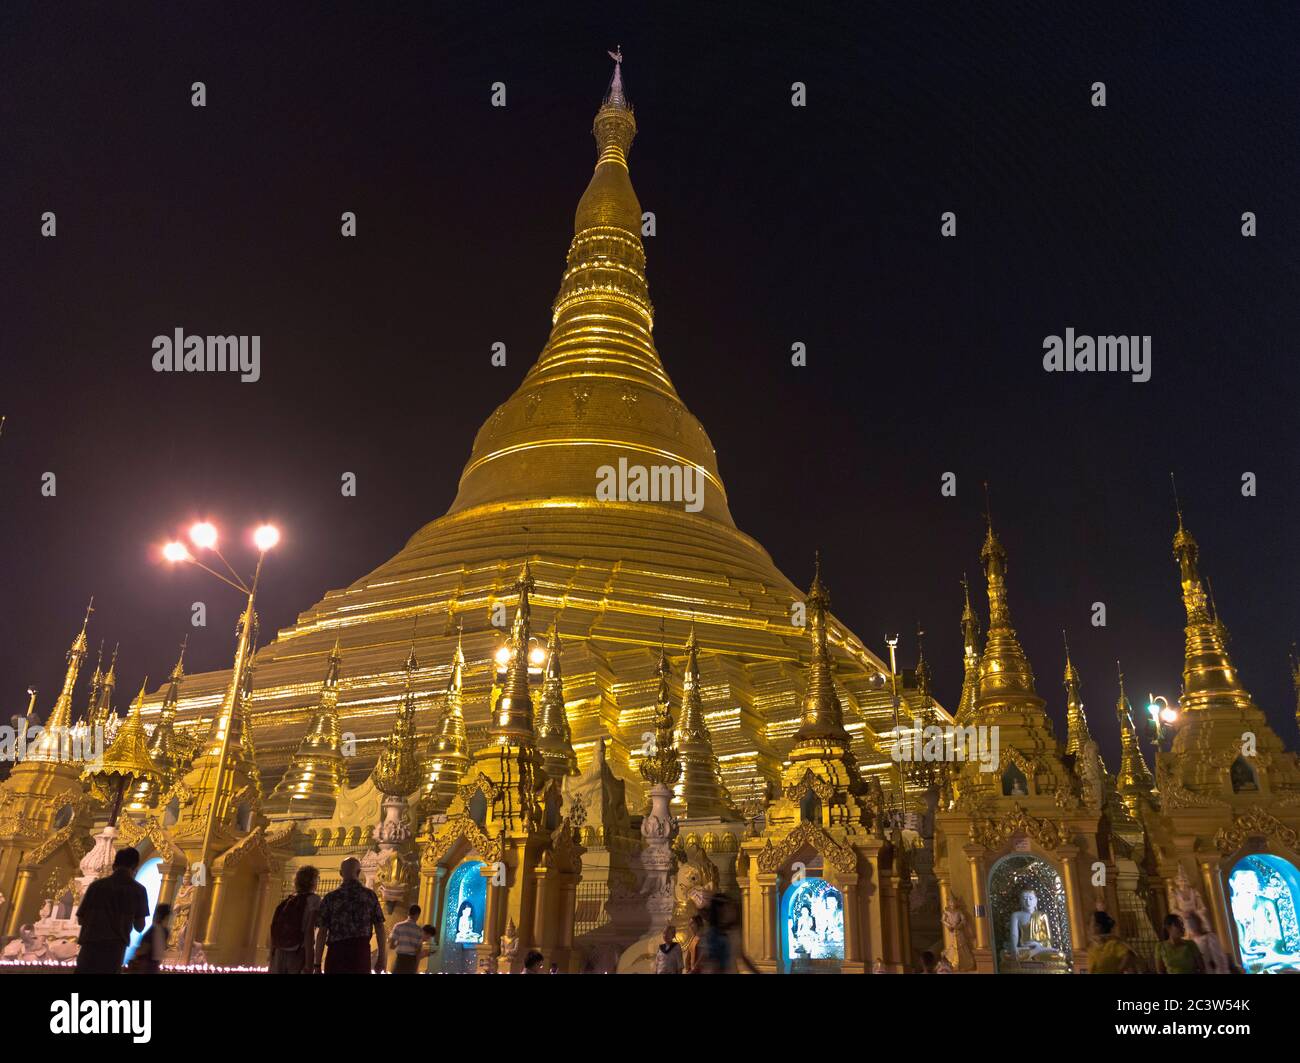 dh Shwedagon Pagoda temple YANGON MYANMAR People buddhist temples night Great Dagon Zedi Daw golden stupa gold leaf burmese far east Stock Photo